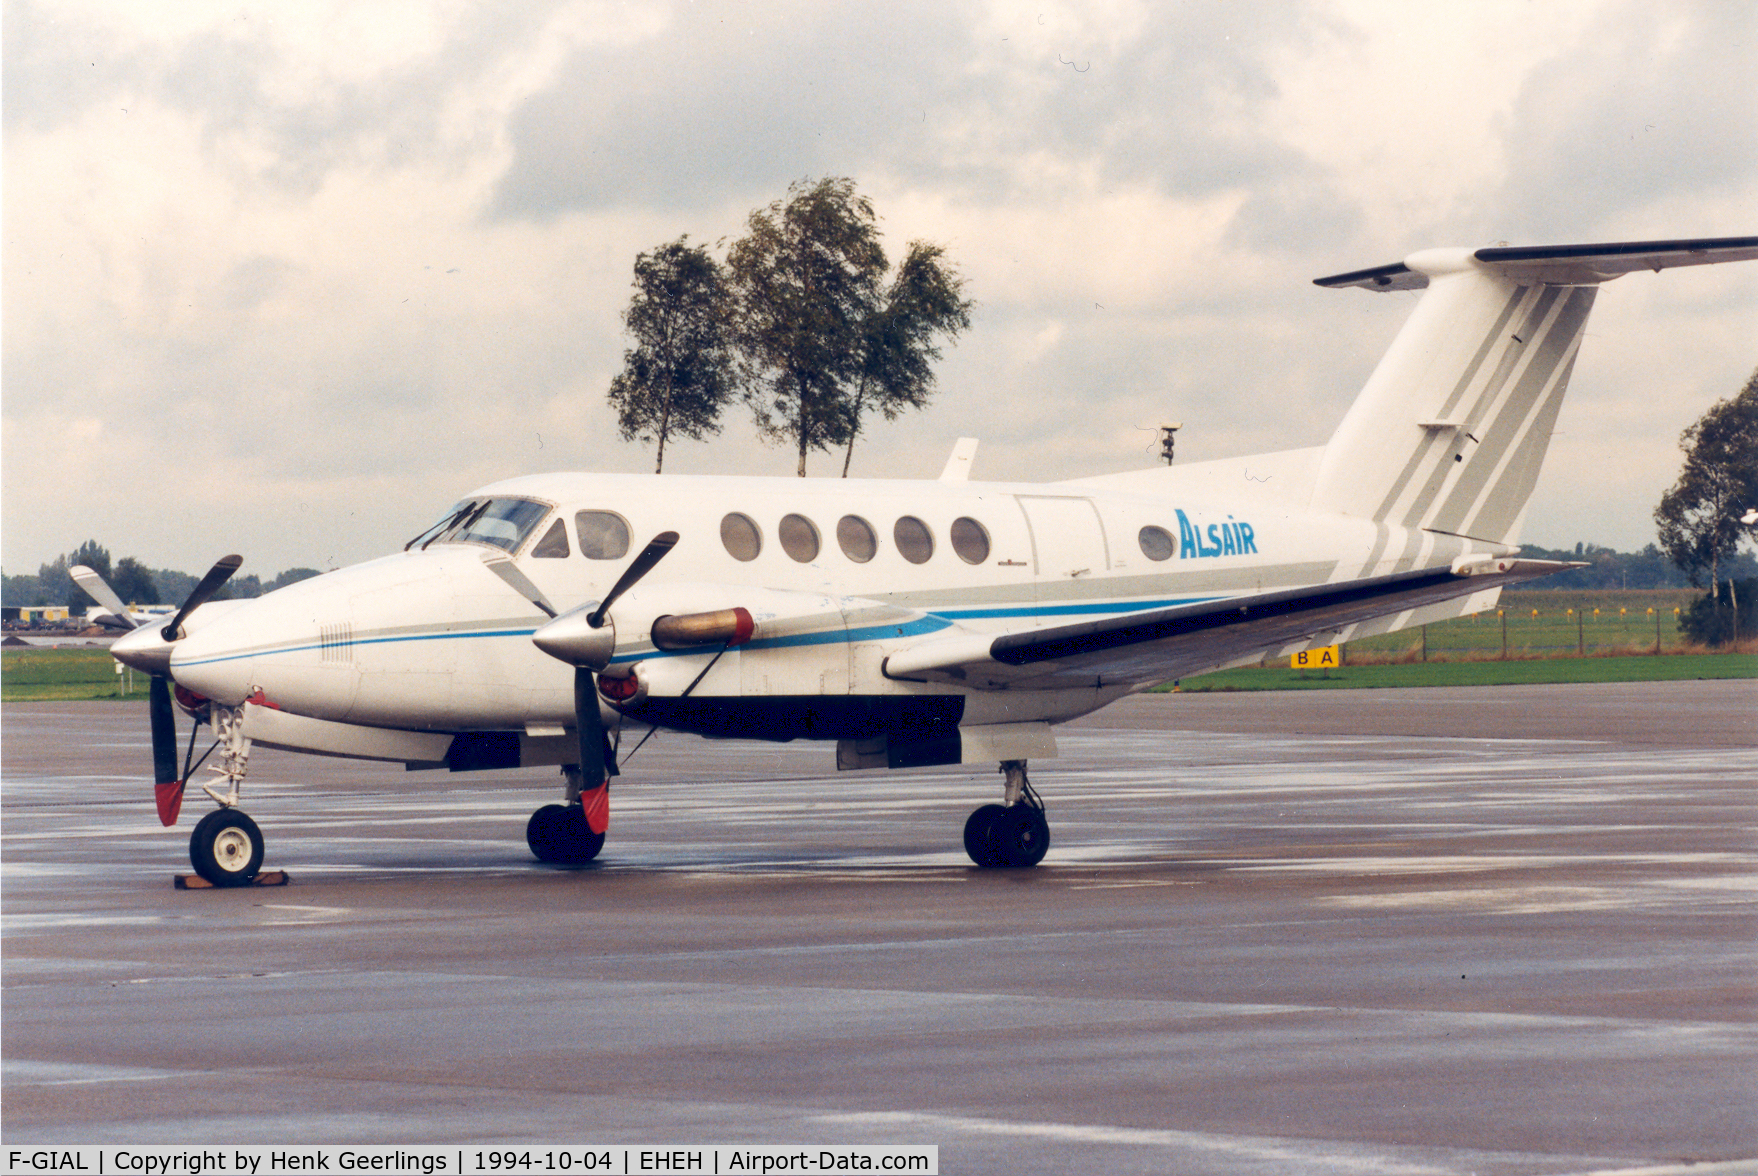 F-GIAL, Beech 200 C/N BB-844, Alsair